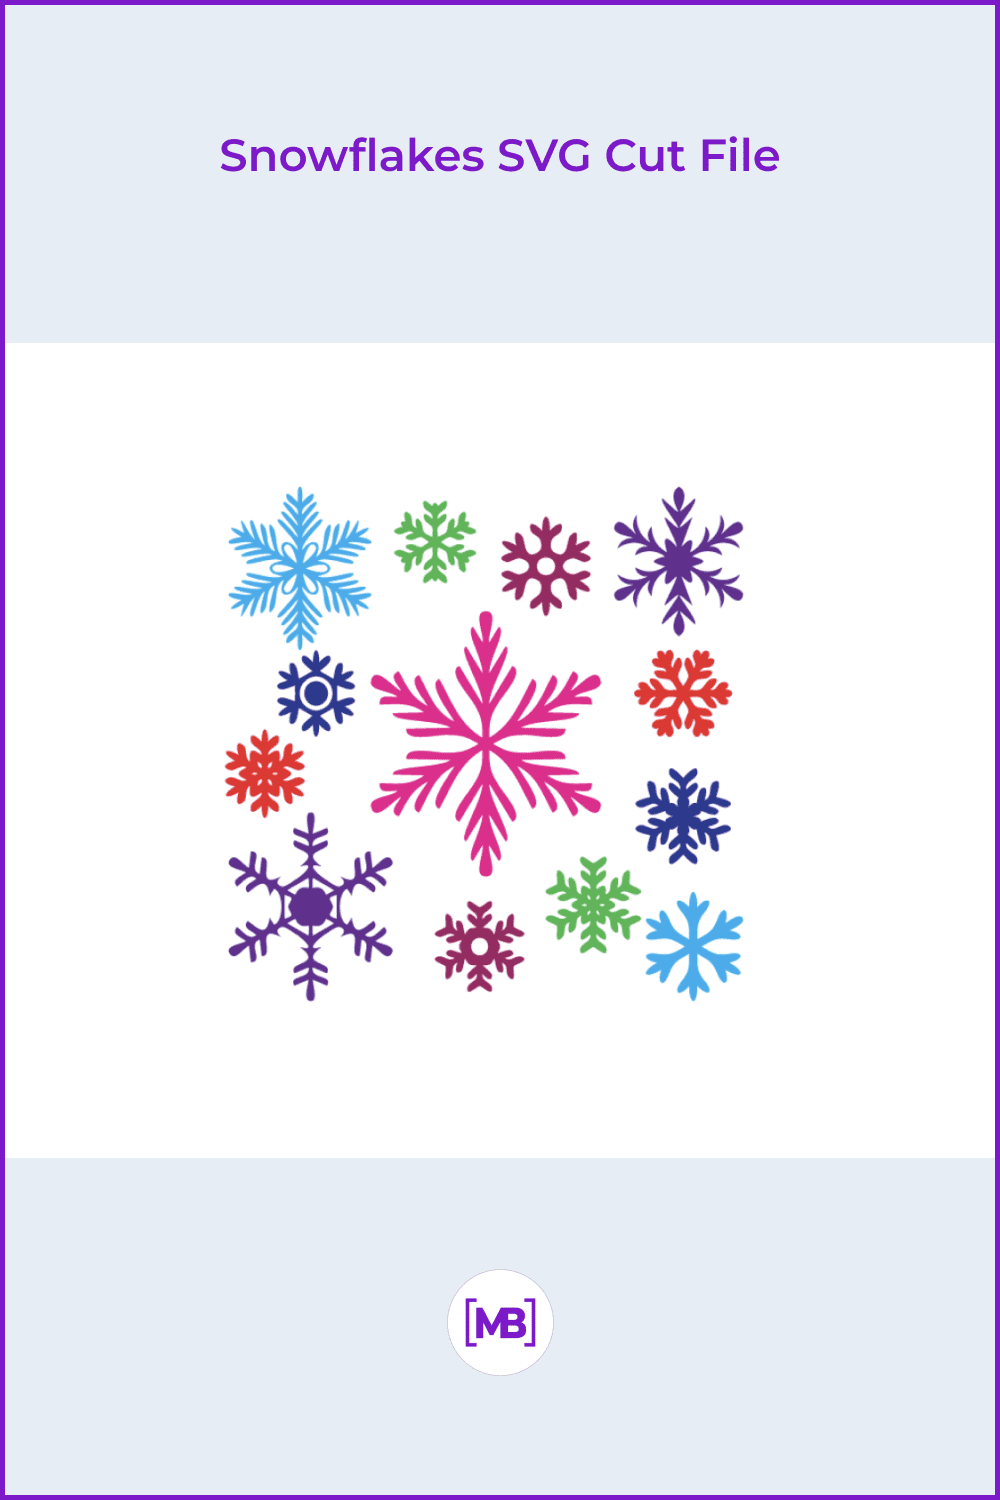 Snowflakes SVG Cut File.